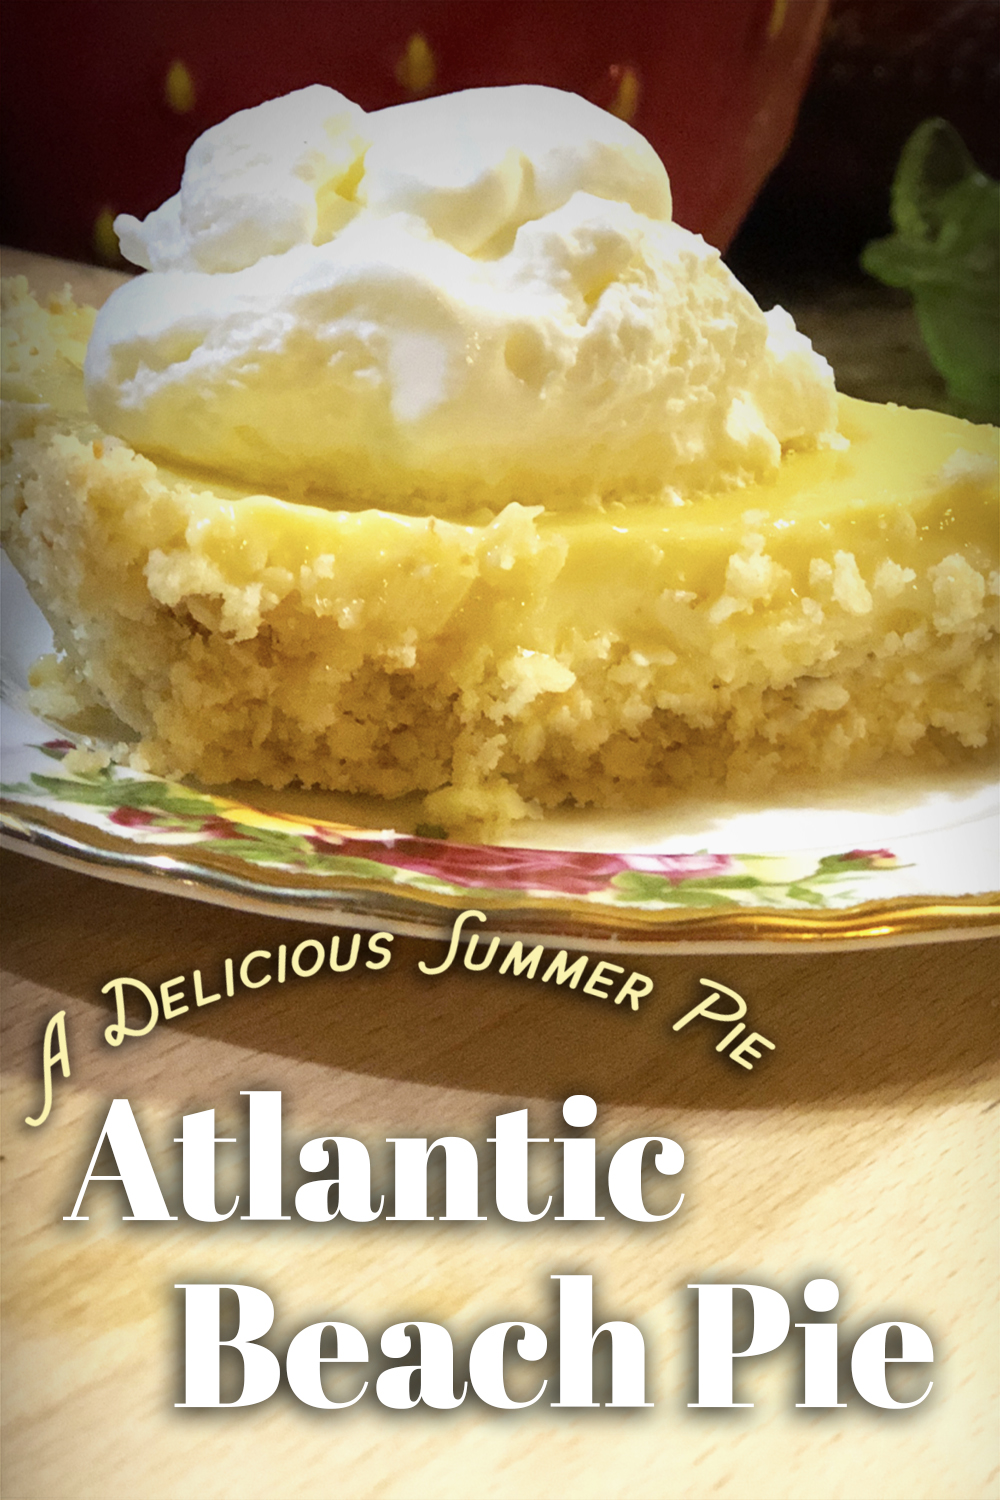 Atlantic Beach Pie